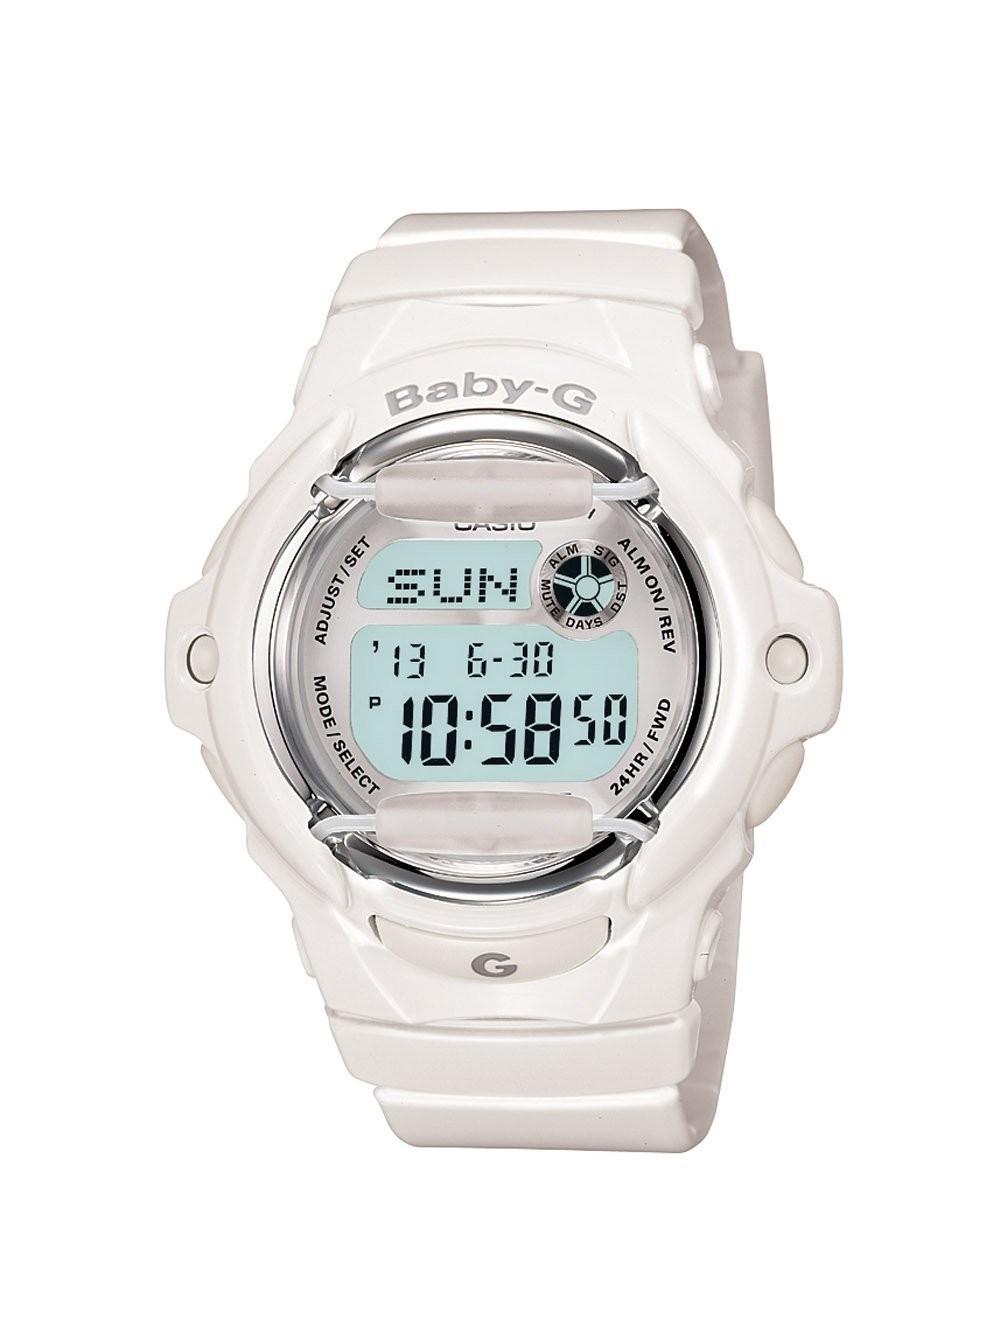 Foto Casio Womens Baby-G White Wale Digital Plastic Watch - White Rubber Strap - Silver Dial - BG169R-7A